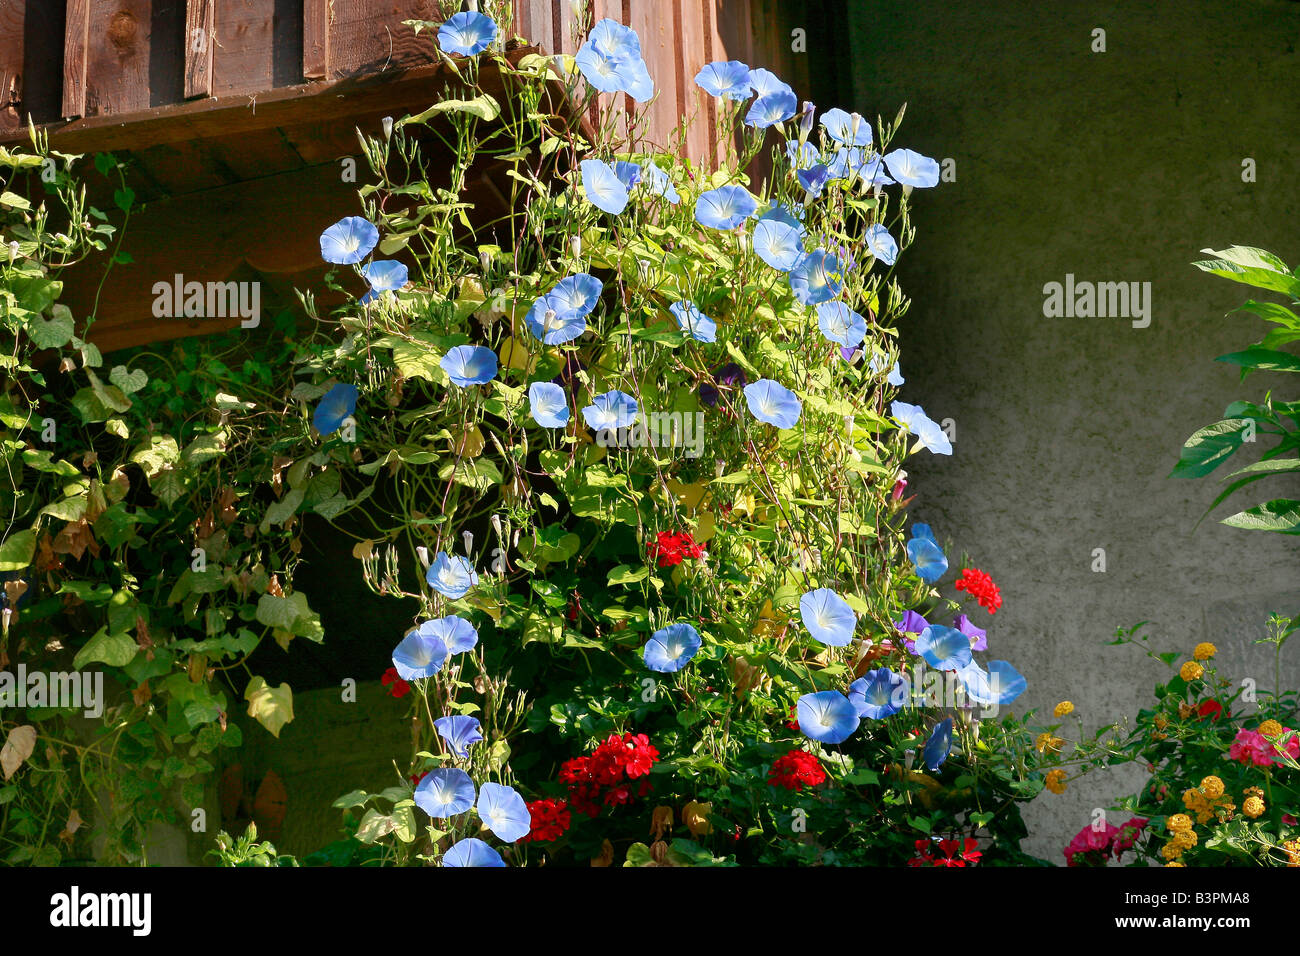 Ipomoea tricolor "Heavenly Blue Stock Alamy